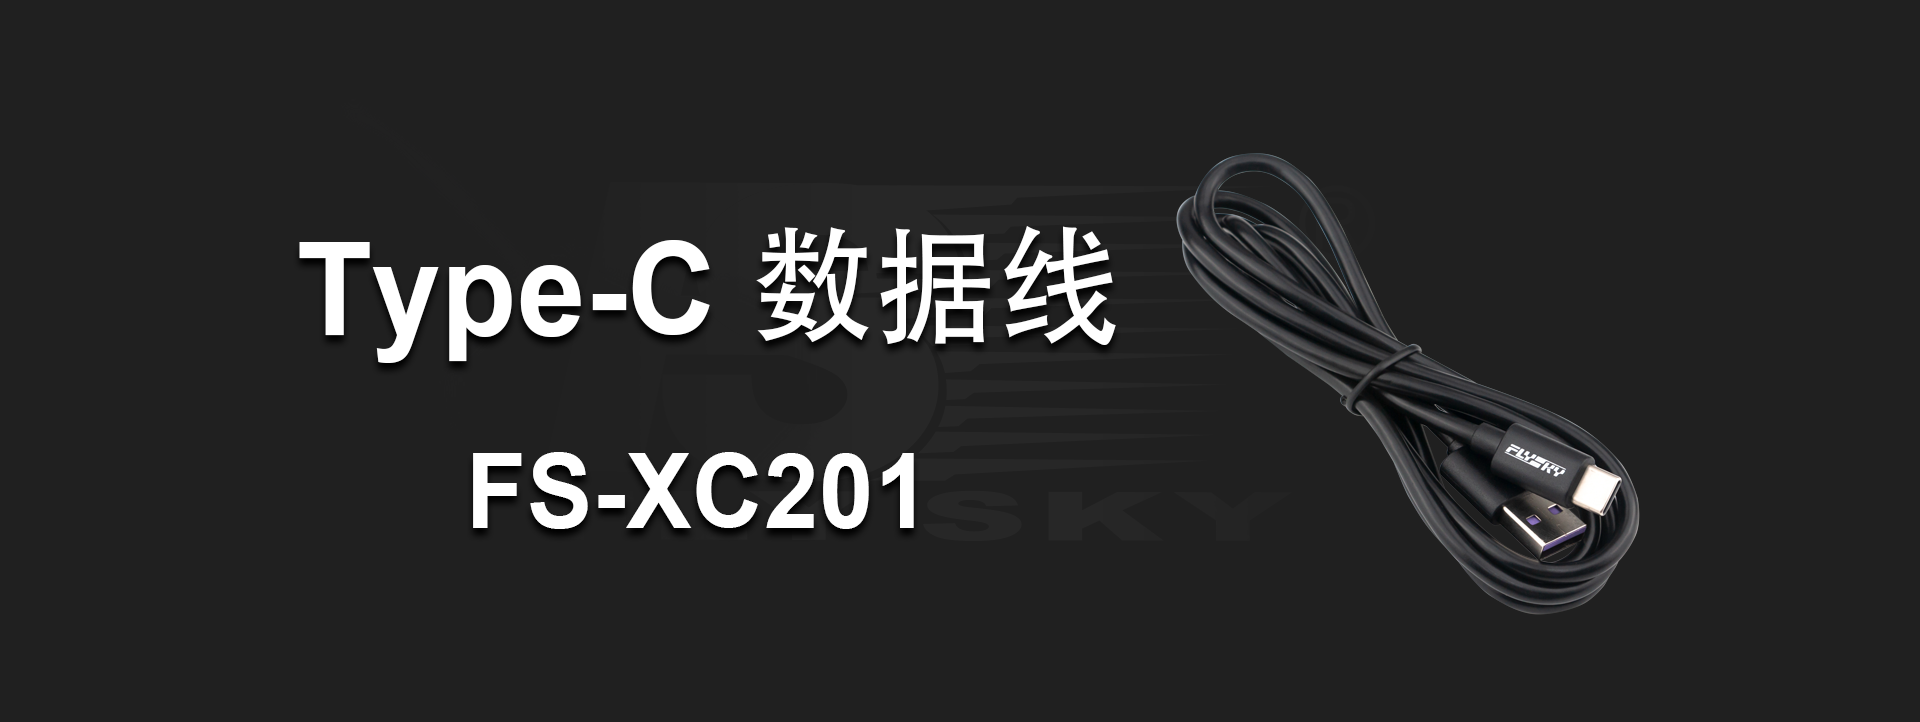 FS-XC201